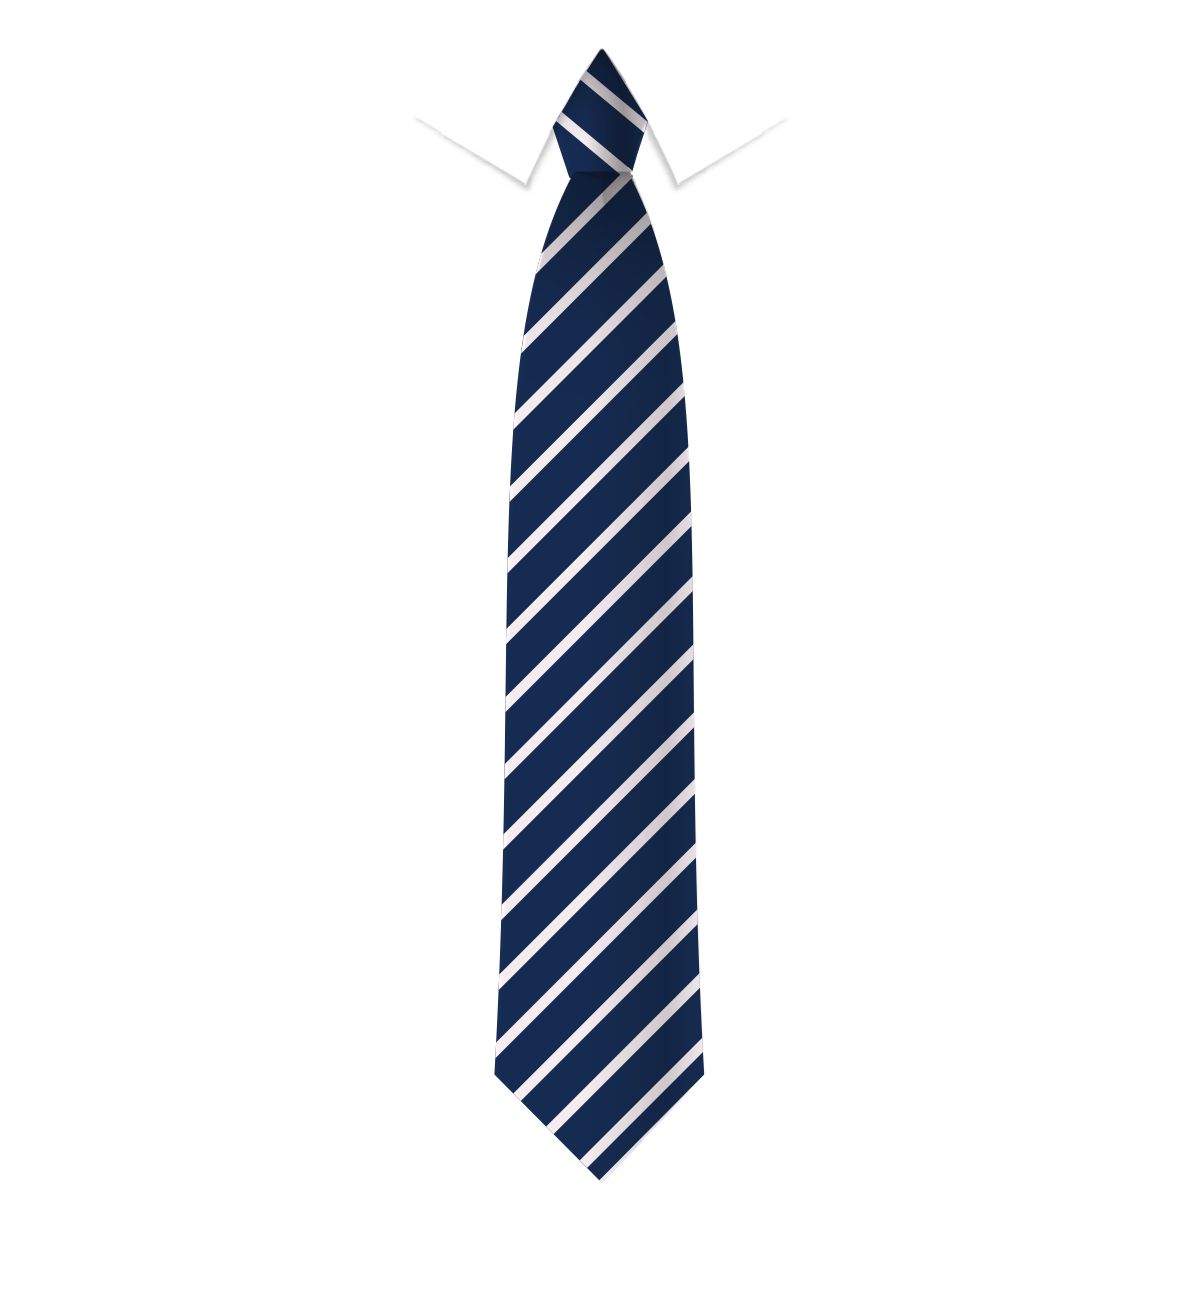 The Rookeries Carleton School Tie